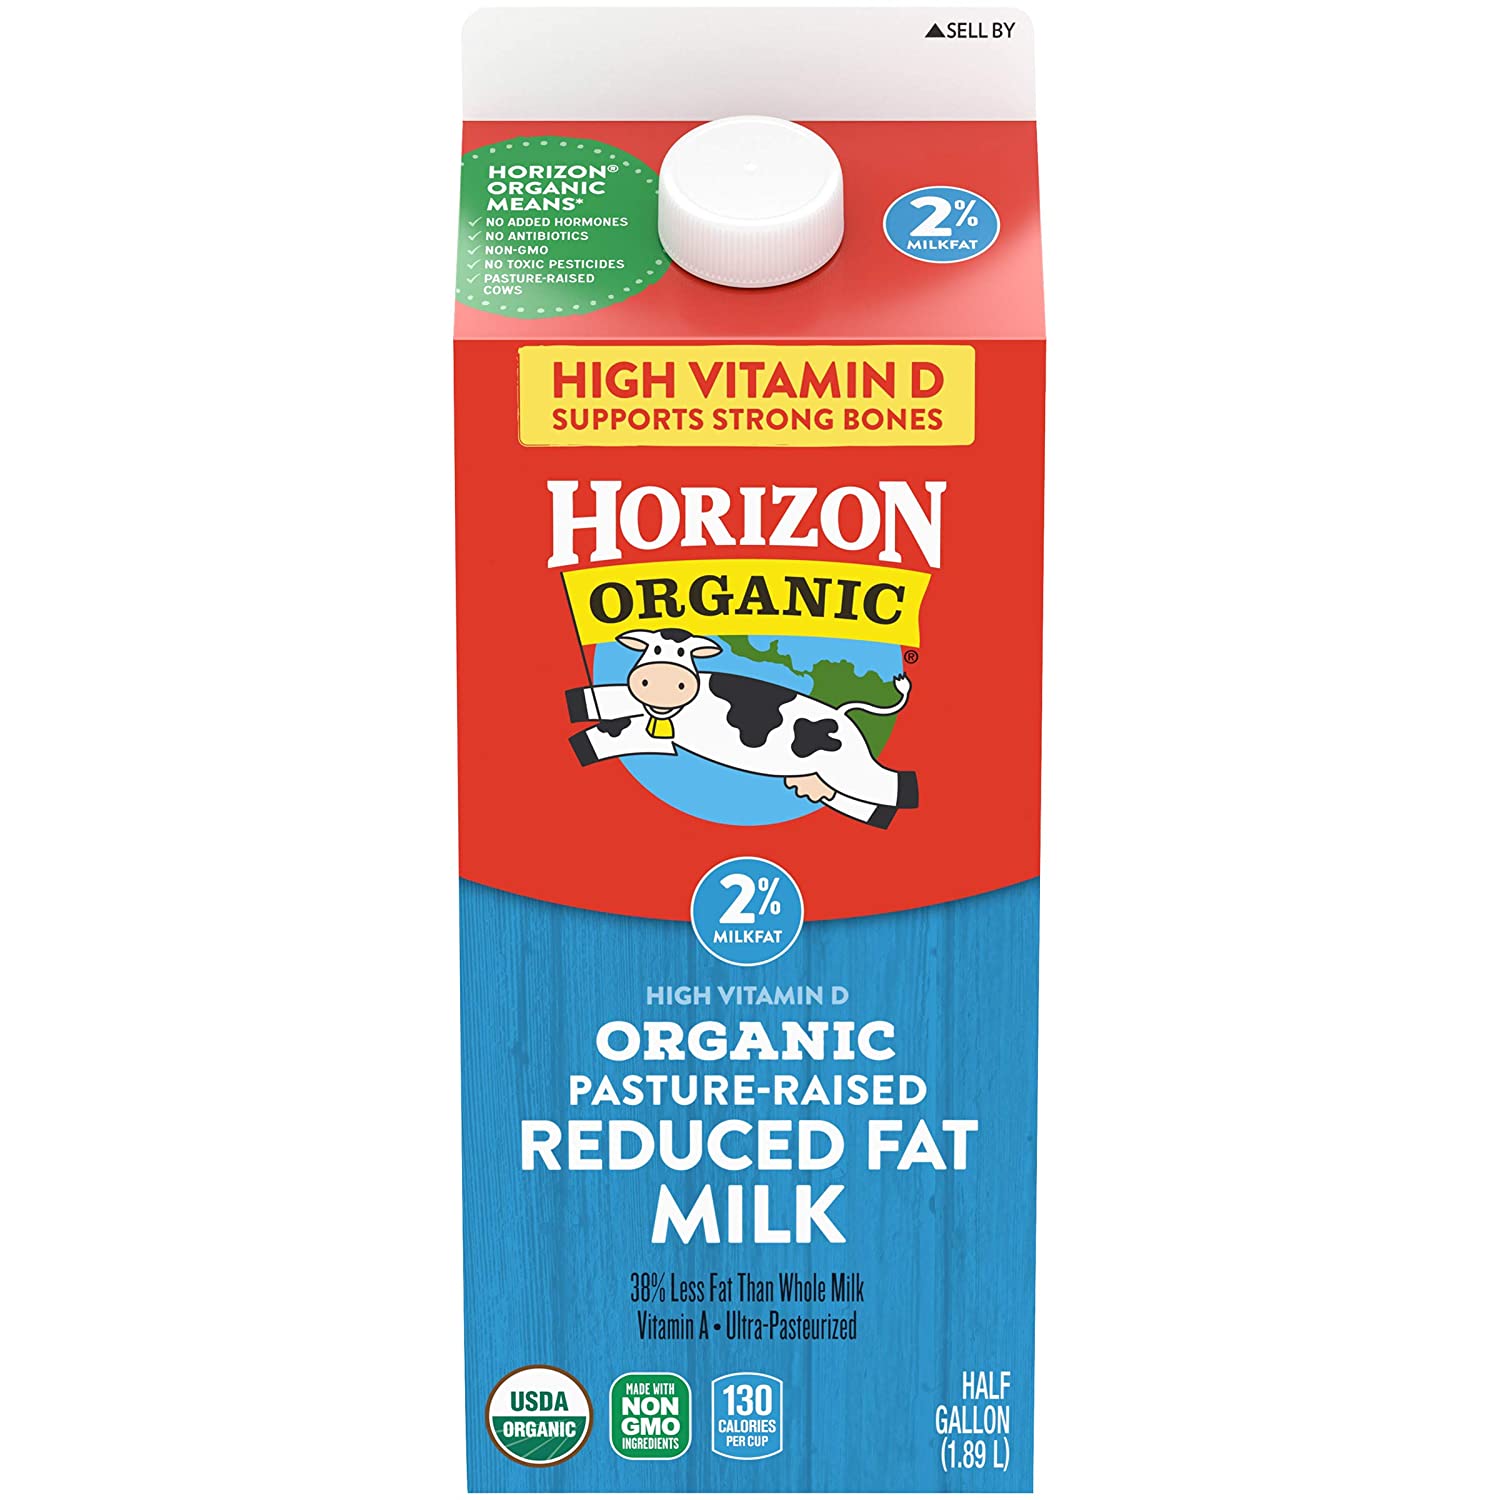 HORIZON ORGANIC Organic Reduced Fat Milk 2%, 0.5 gal